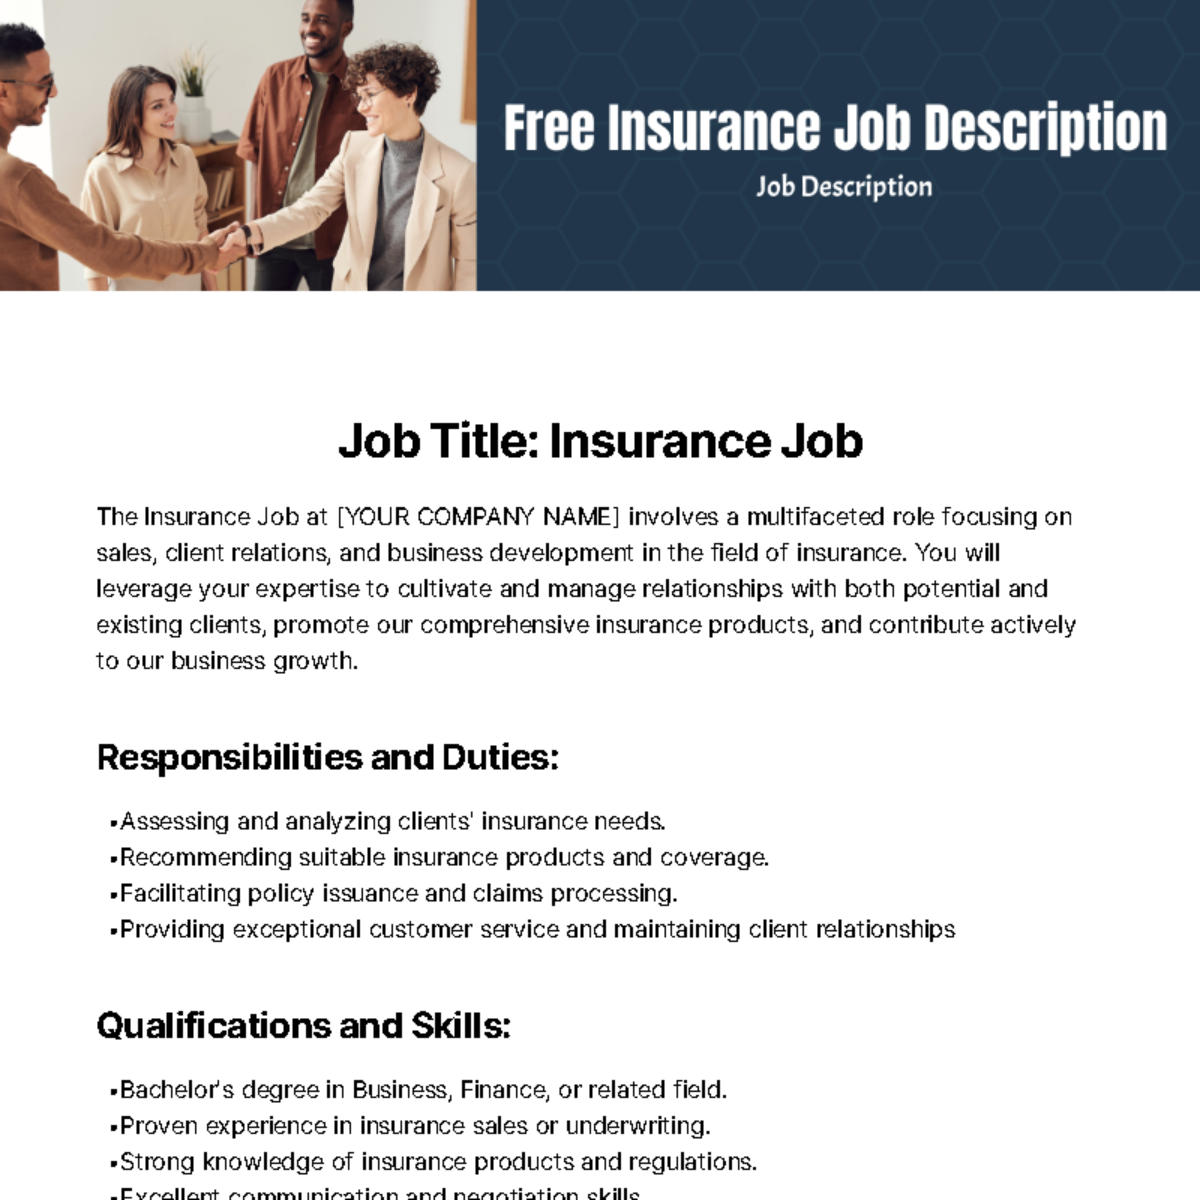 Free Insurance Job Description Template